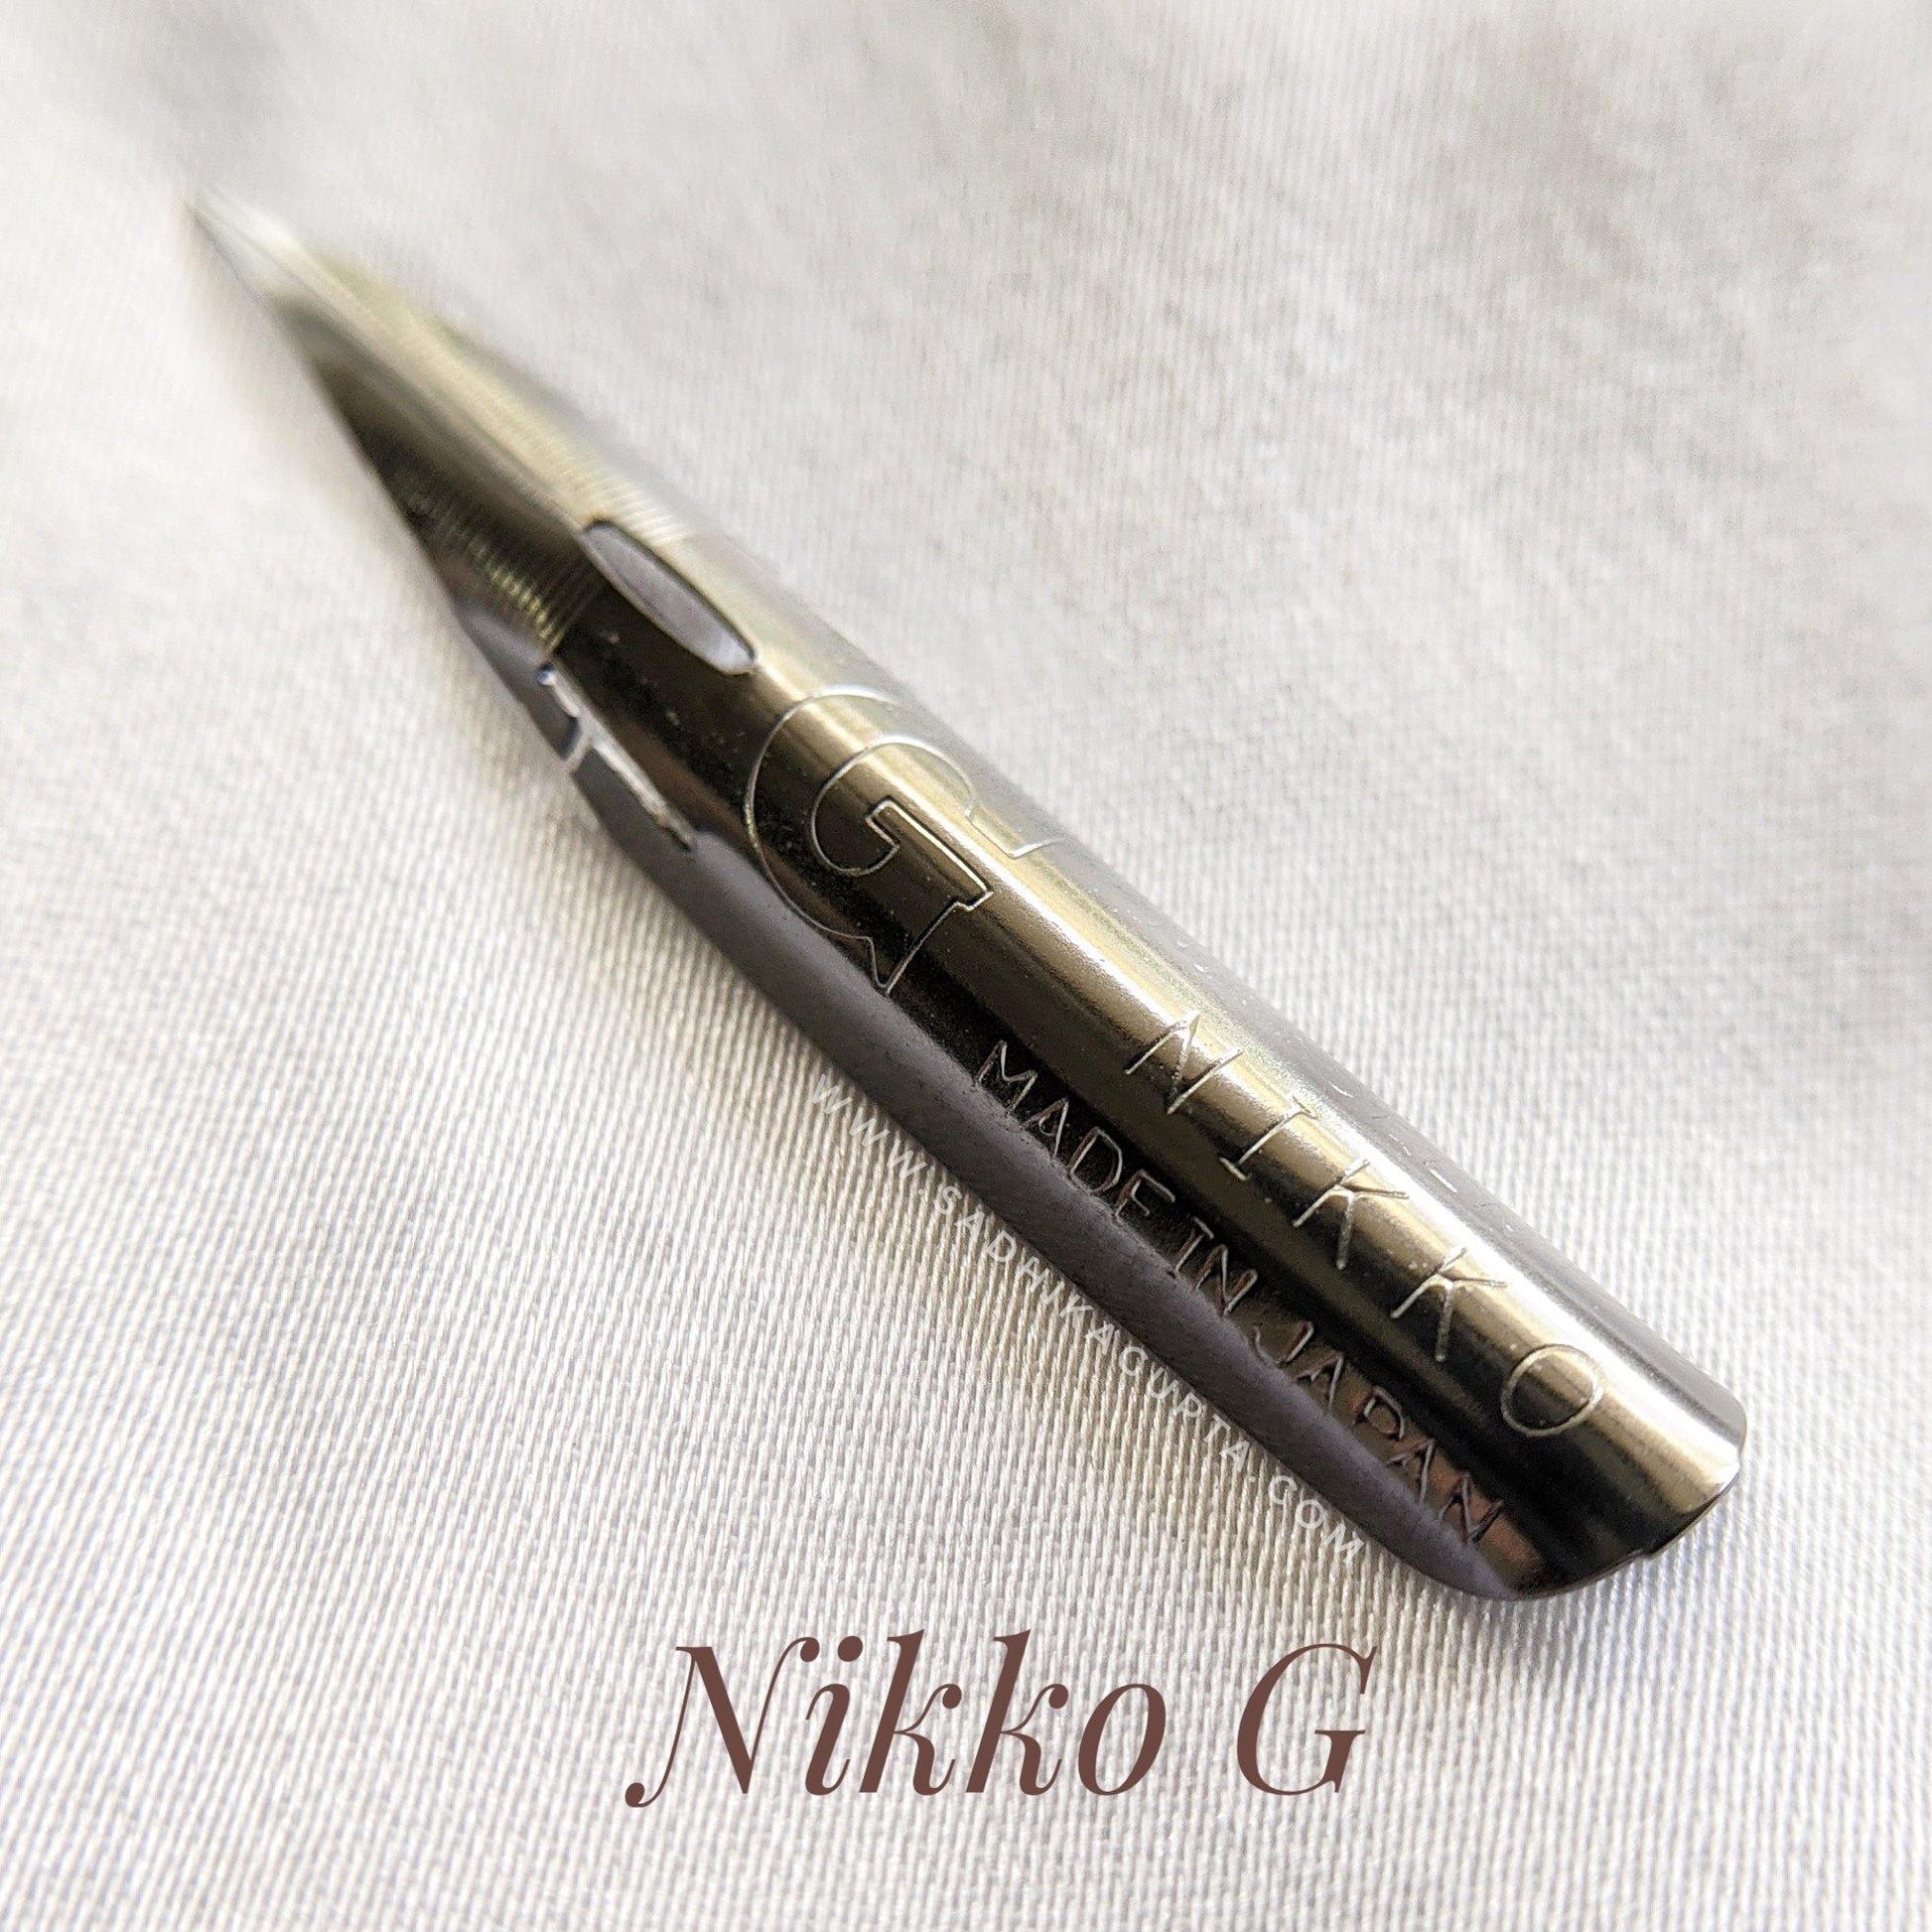 Nikko G nib – Delhi Doodler